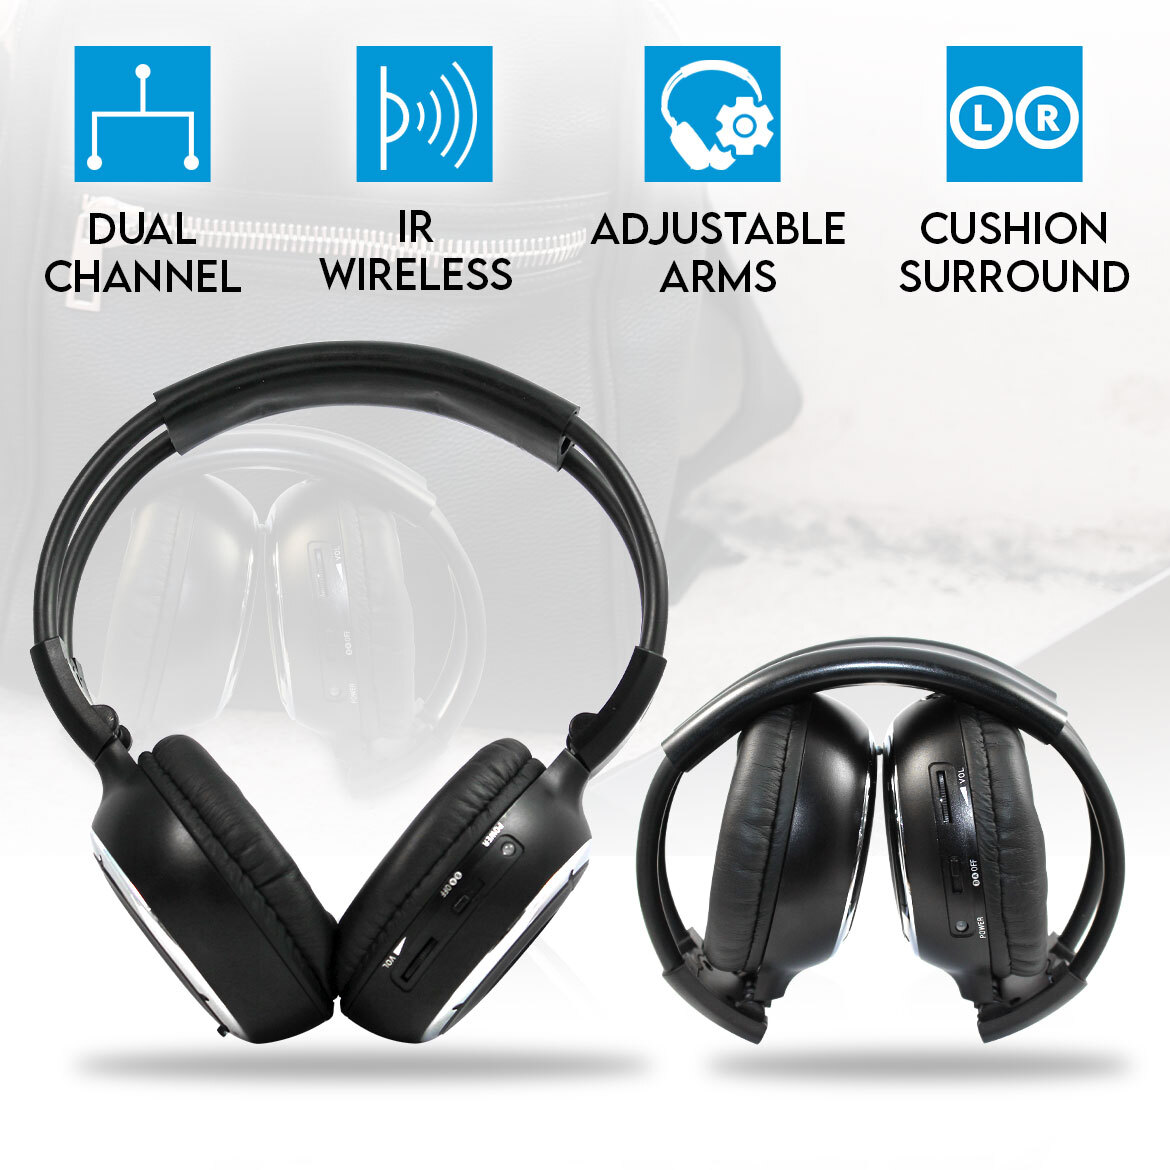 Elinz WIRELESS IR CORDLESS Dual Channel Headphone 2PAIRS